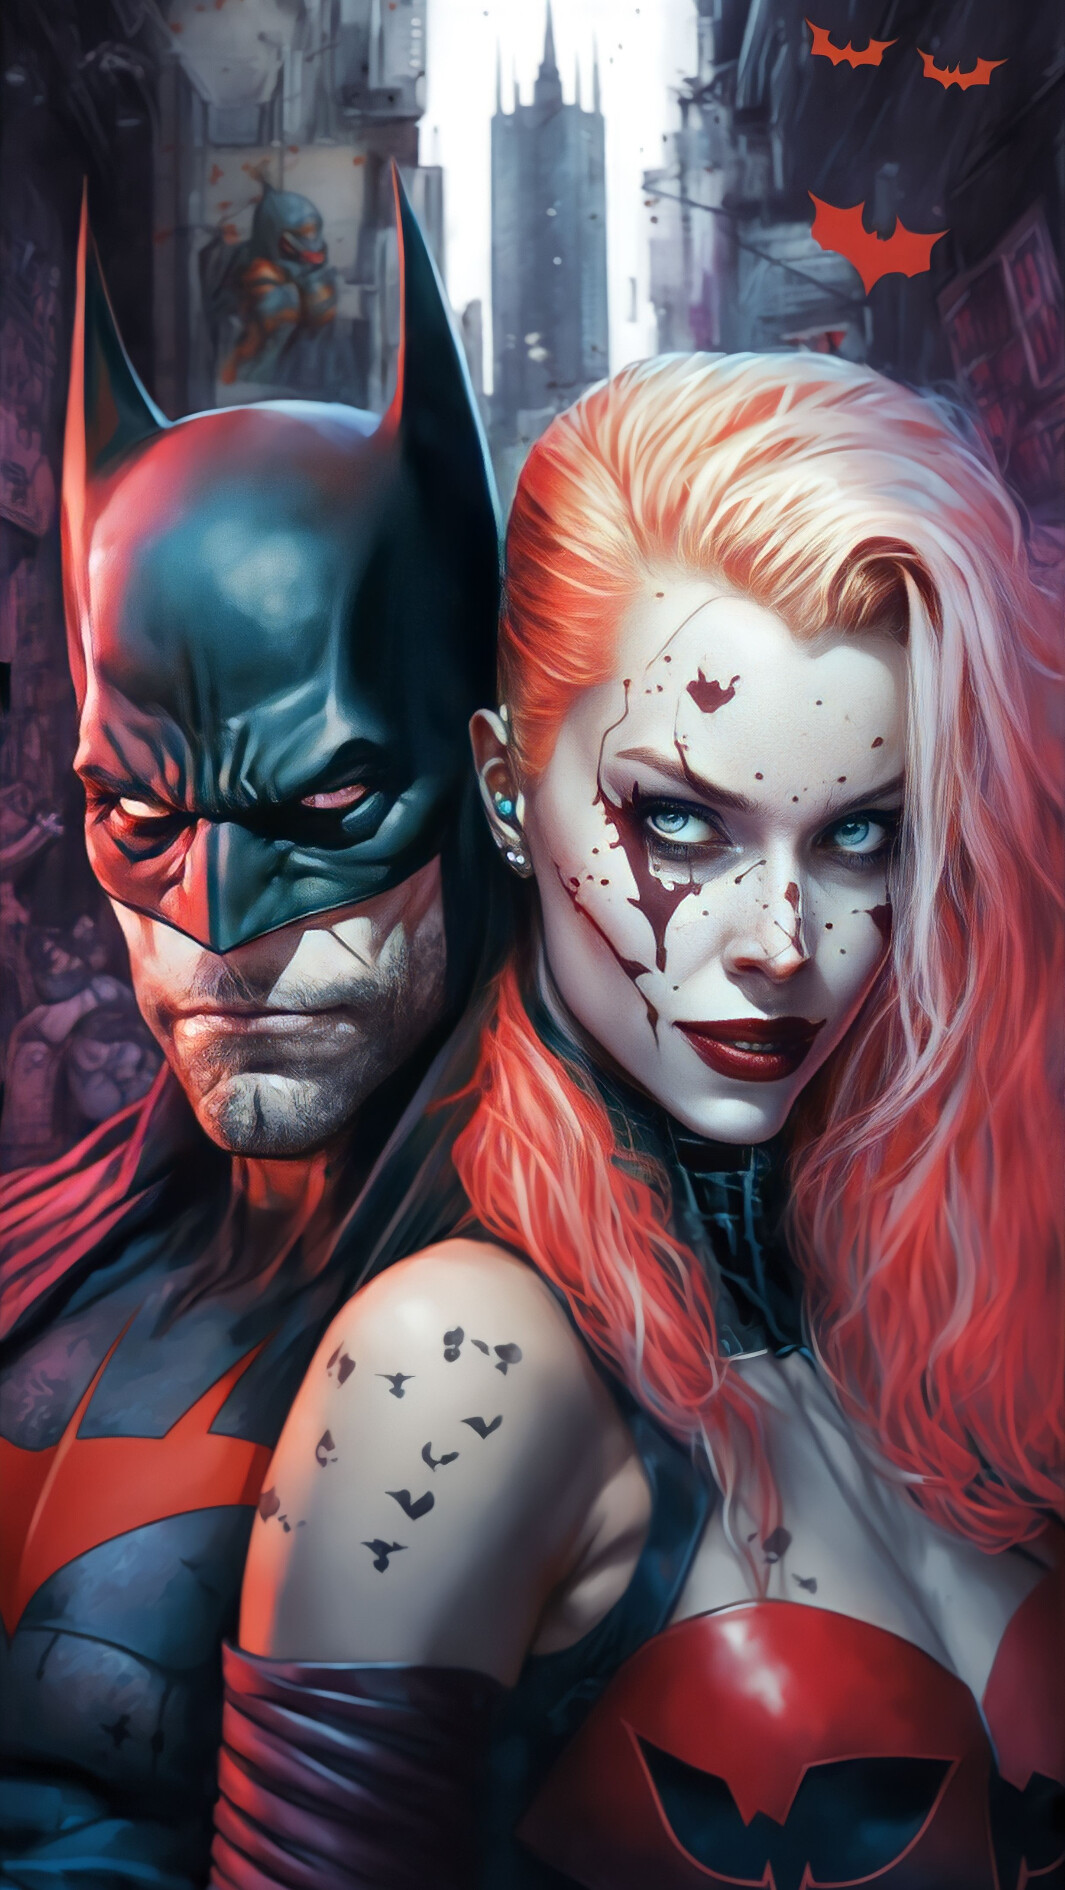 ArtStation - Batman and Harley